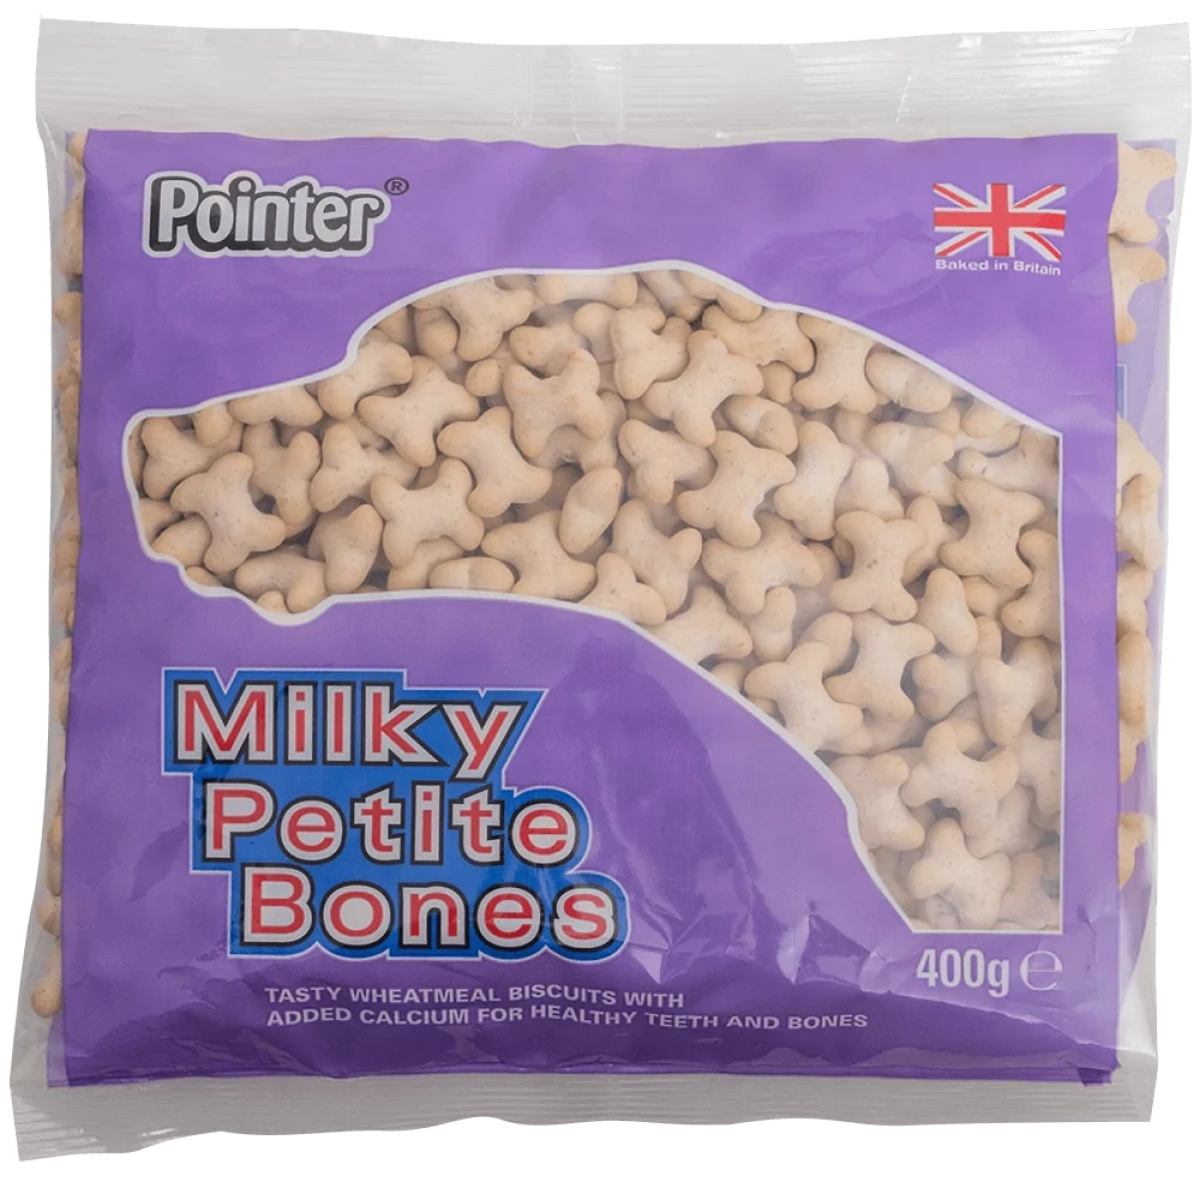 Pointer Milky Petite Bones 400g Main Image